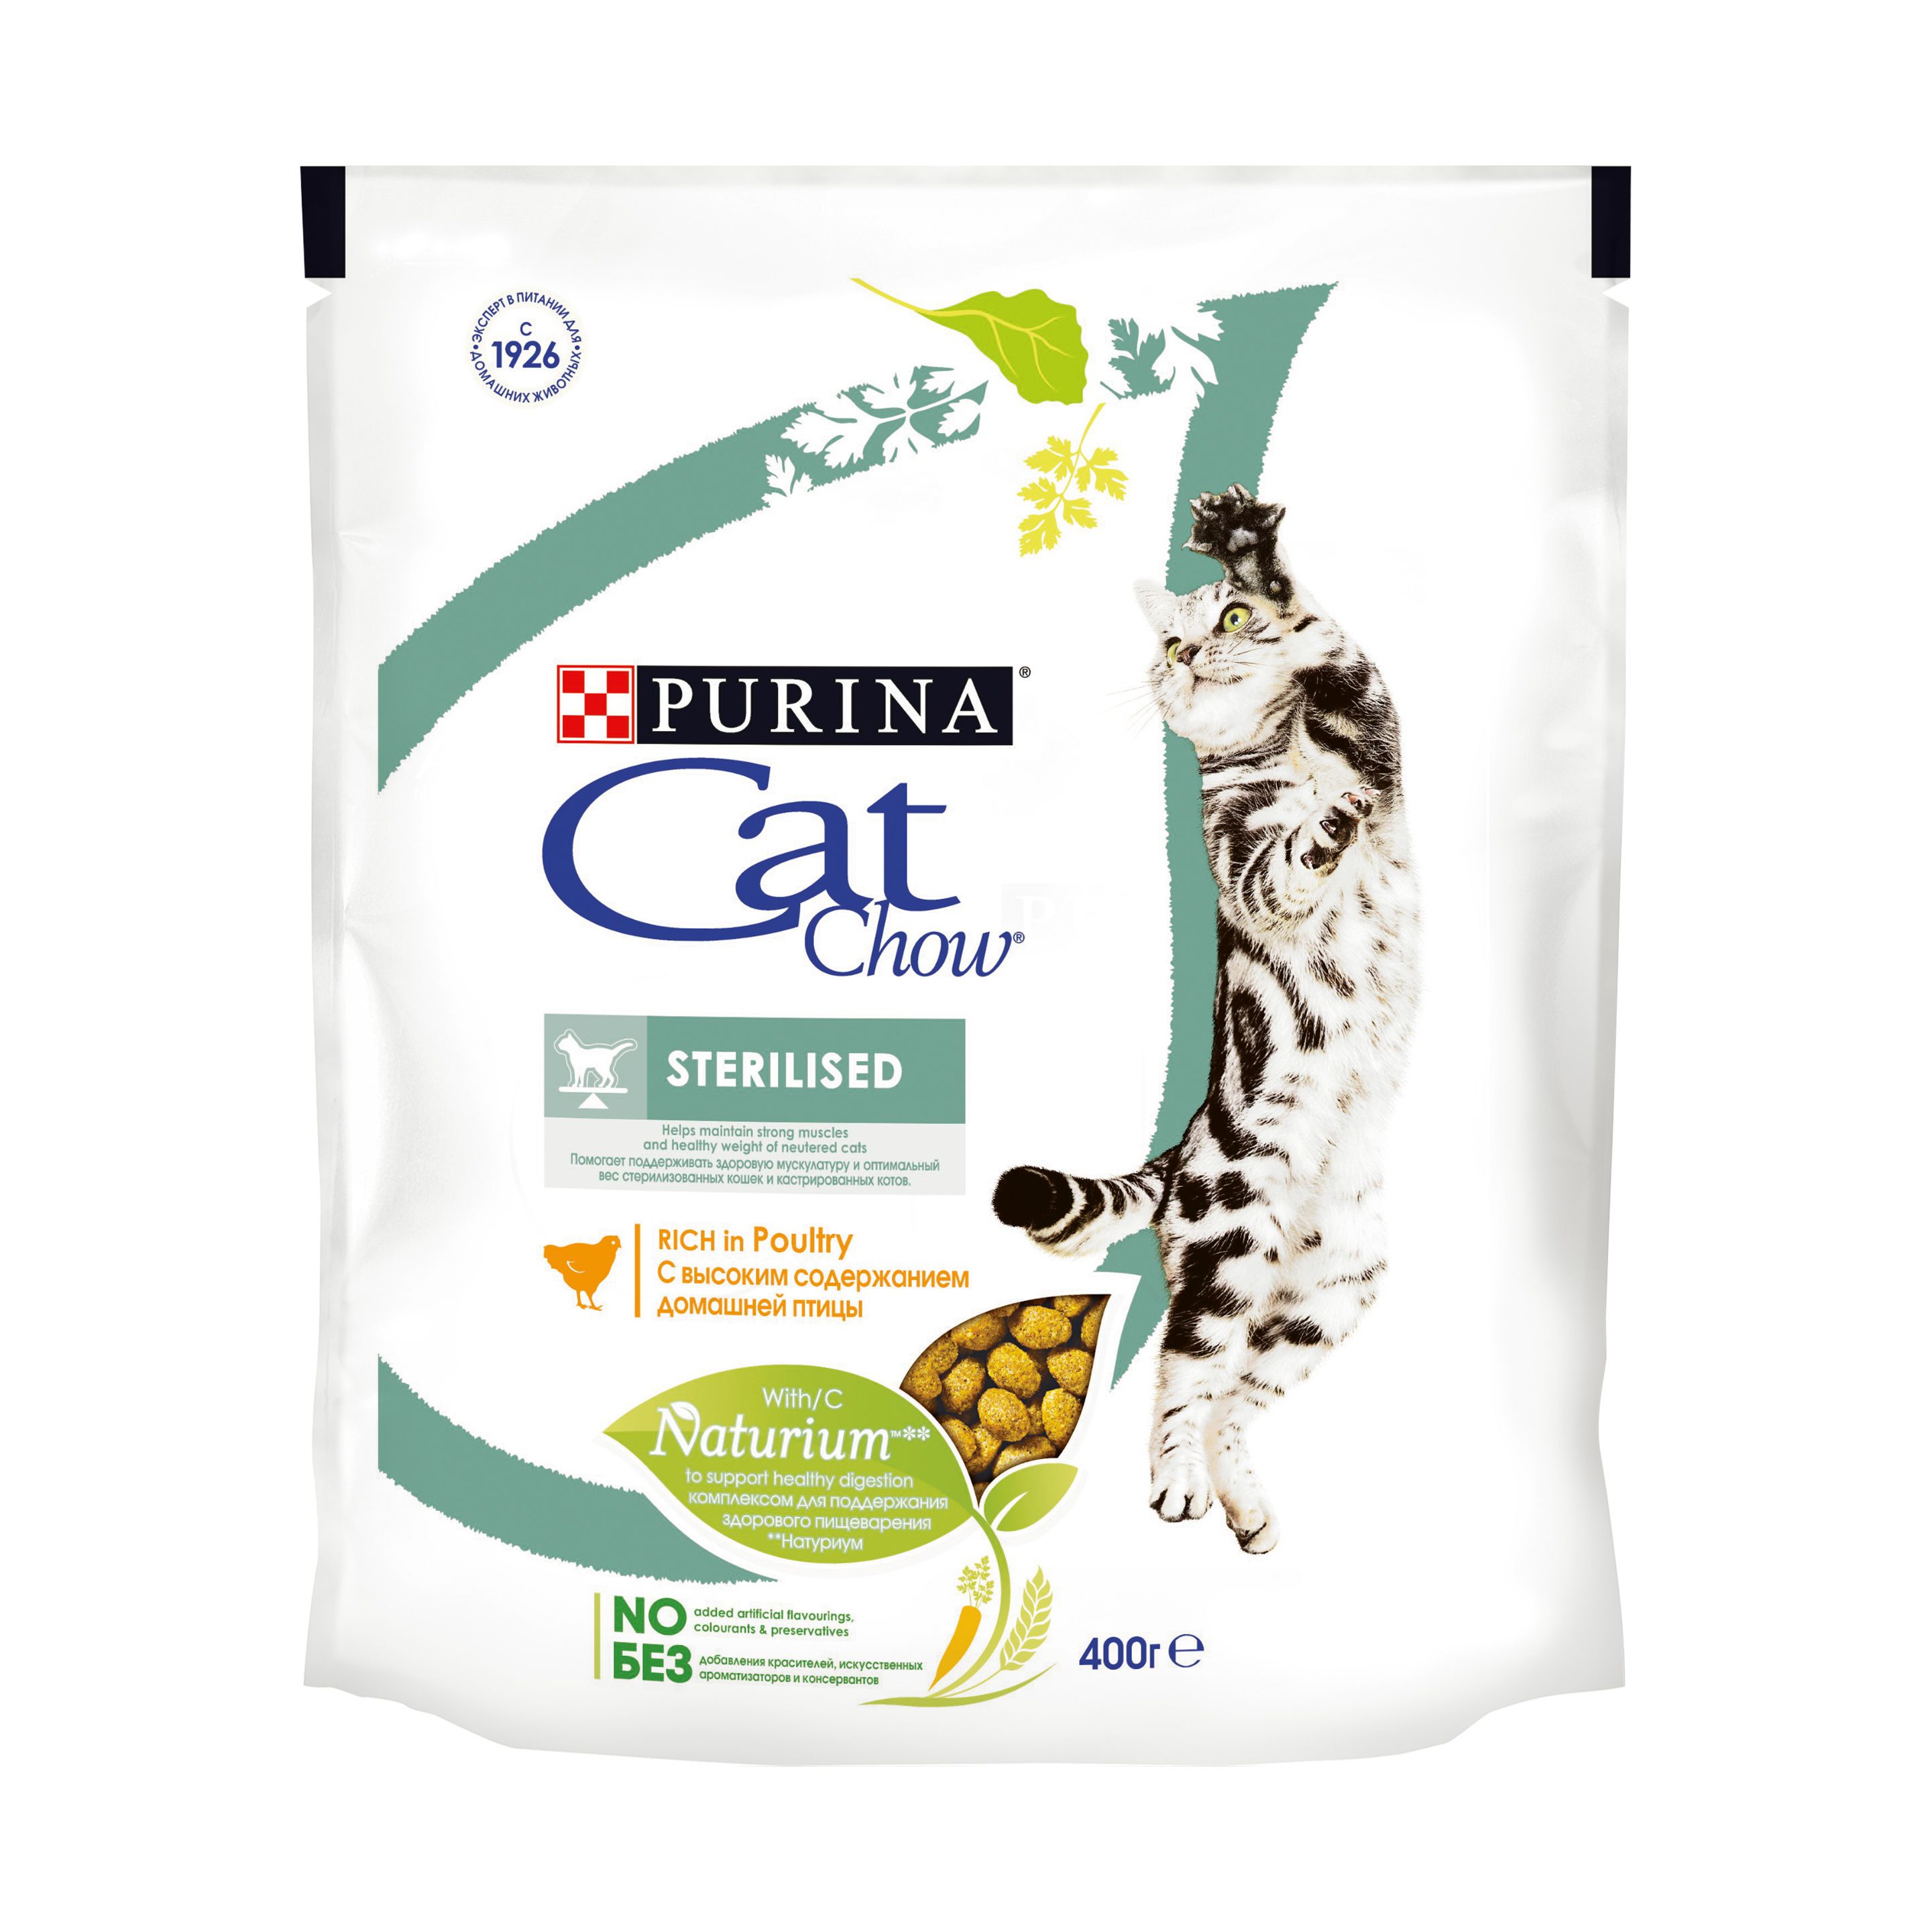 Purina Cat Chow Adult Сухой корм для кошек с птицей 0,4 кг АКЦИЯ